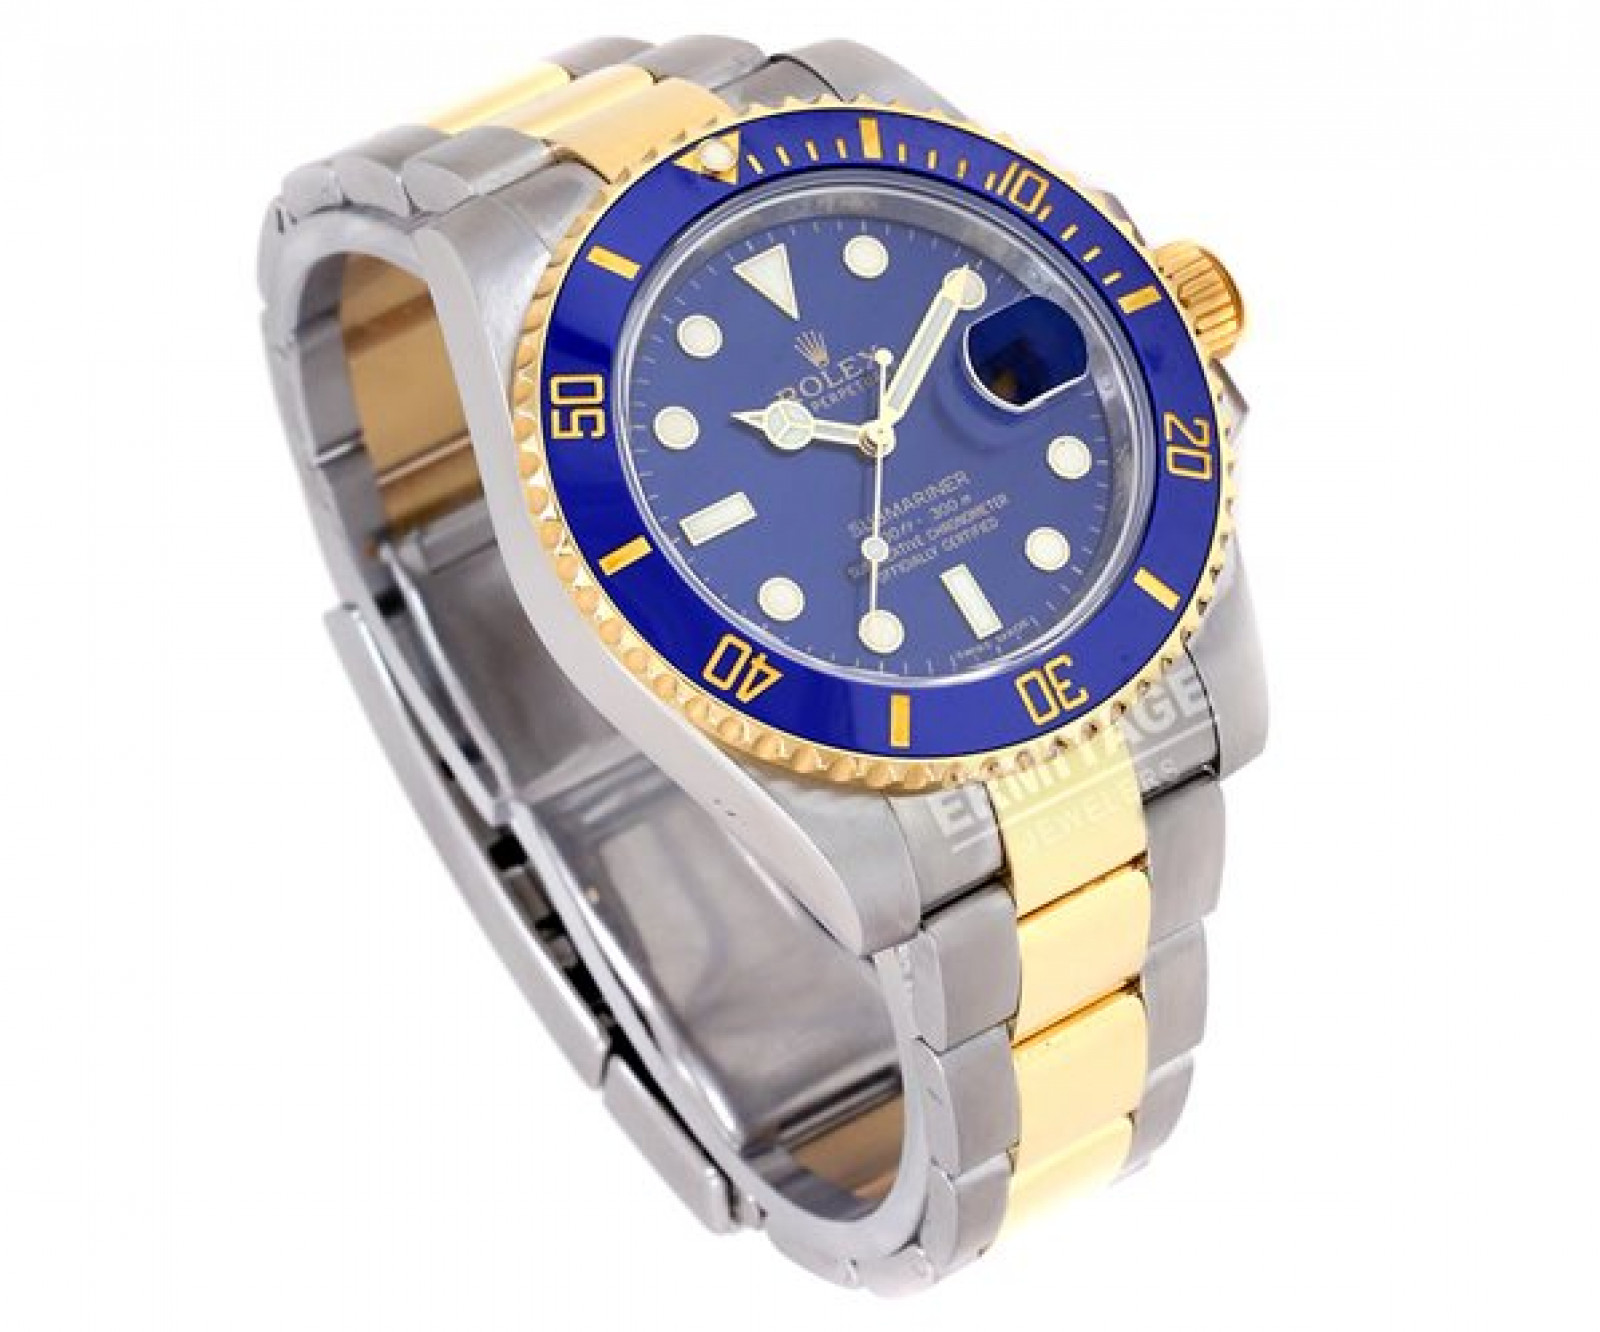 Rolex Submariner 116613LB Gold & Steel Blue 2015